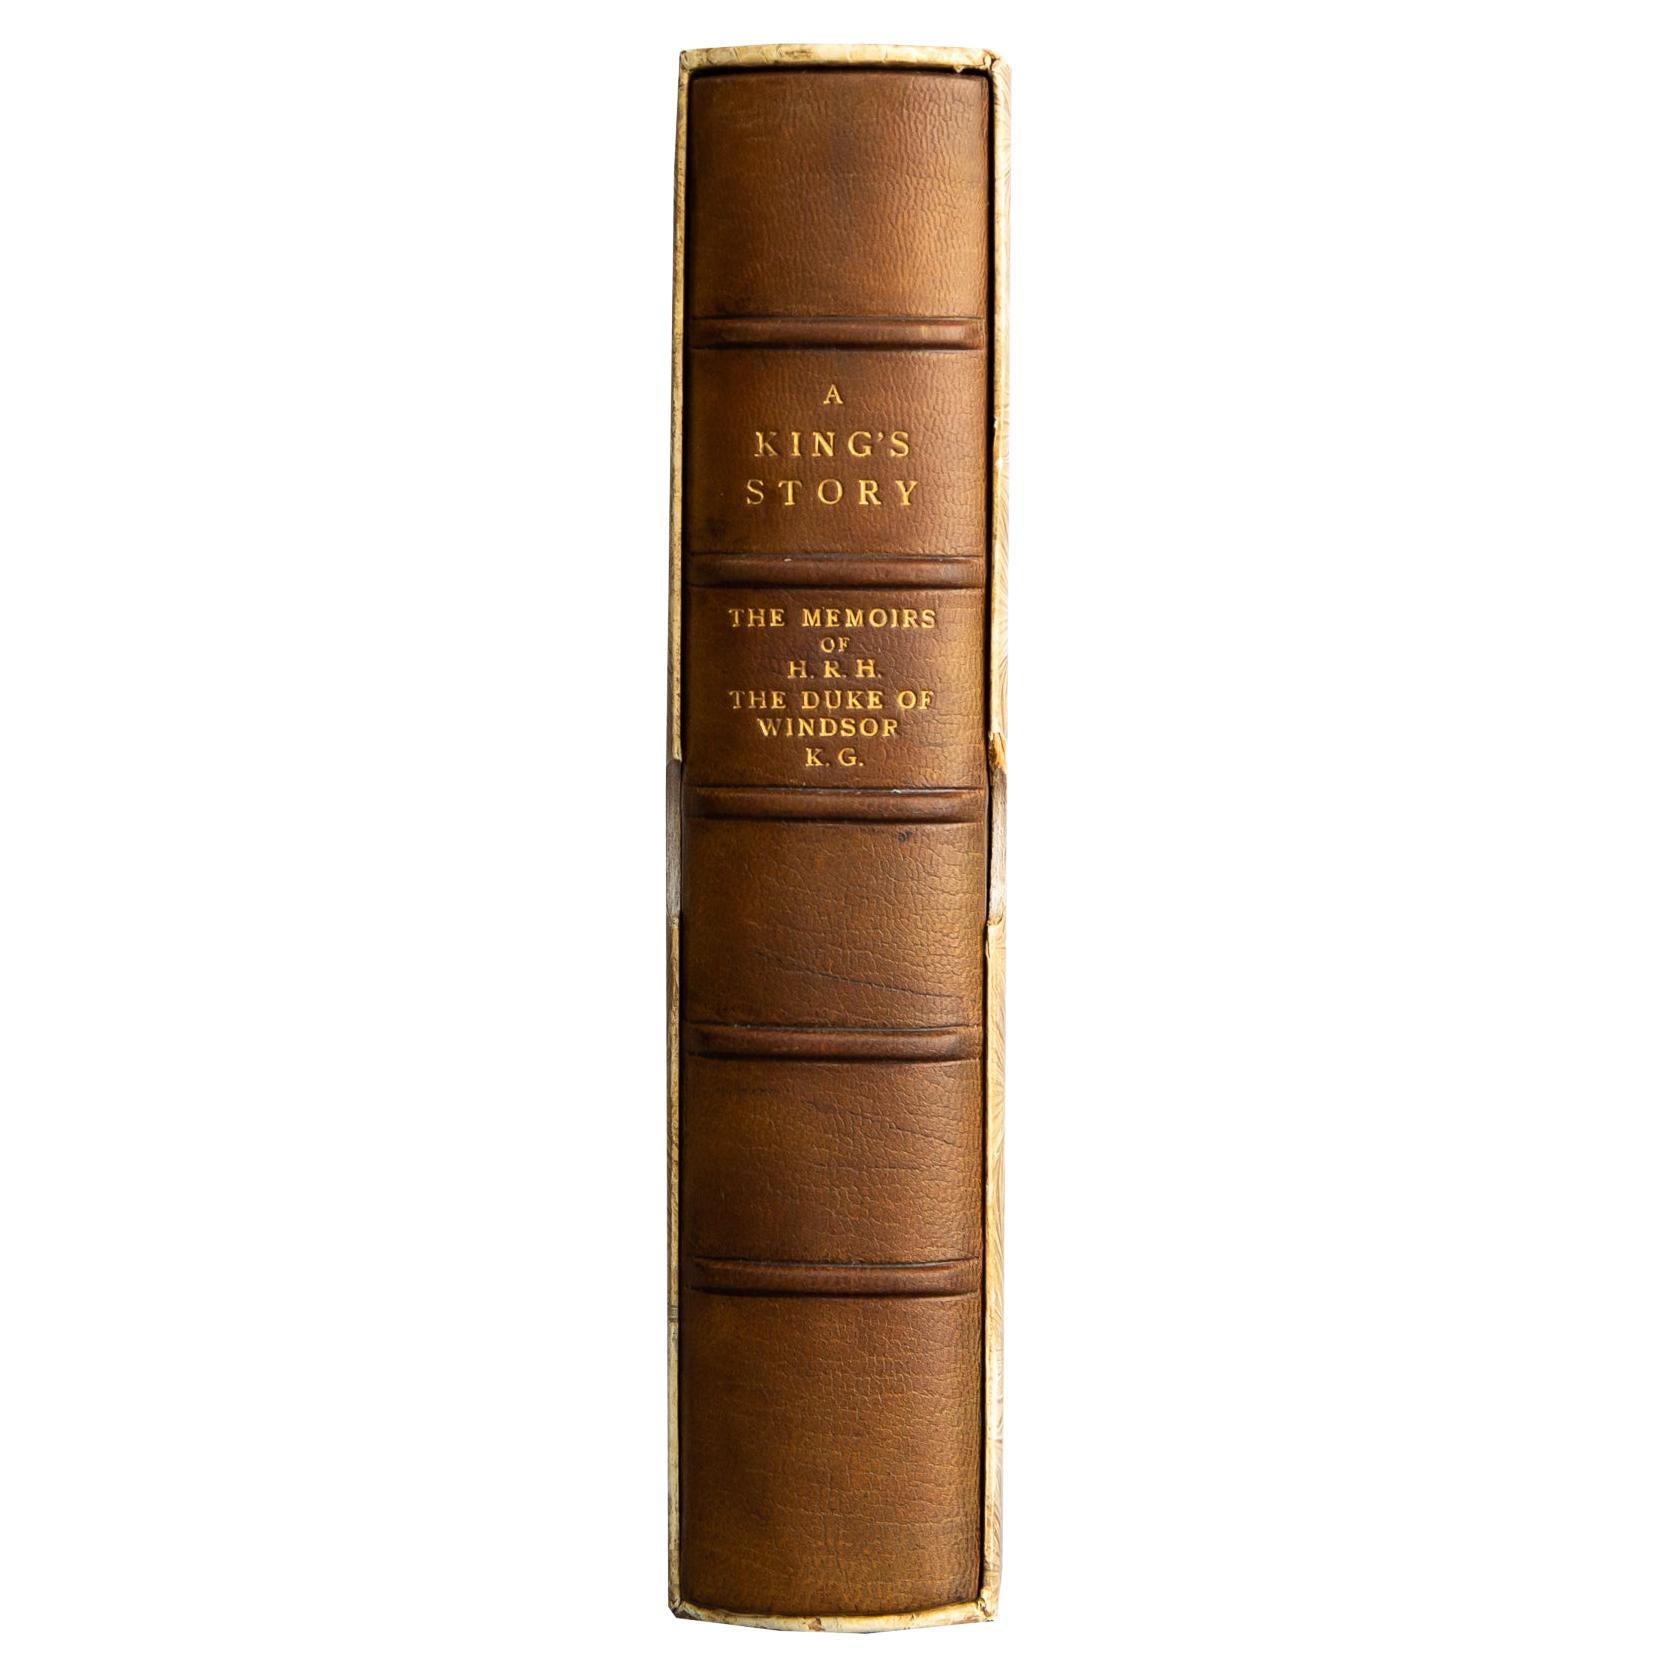 1 Volume, H.R.H, the Duke of Windsor, a King's Story